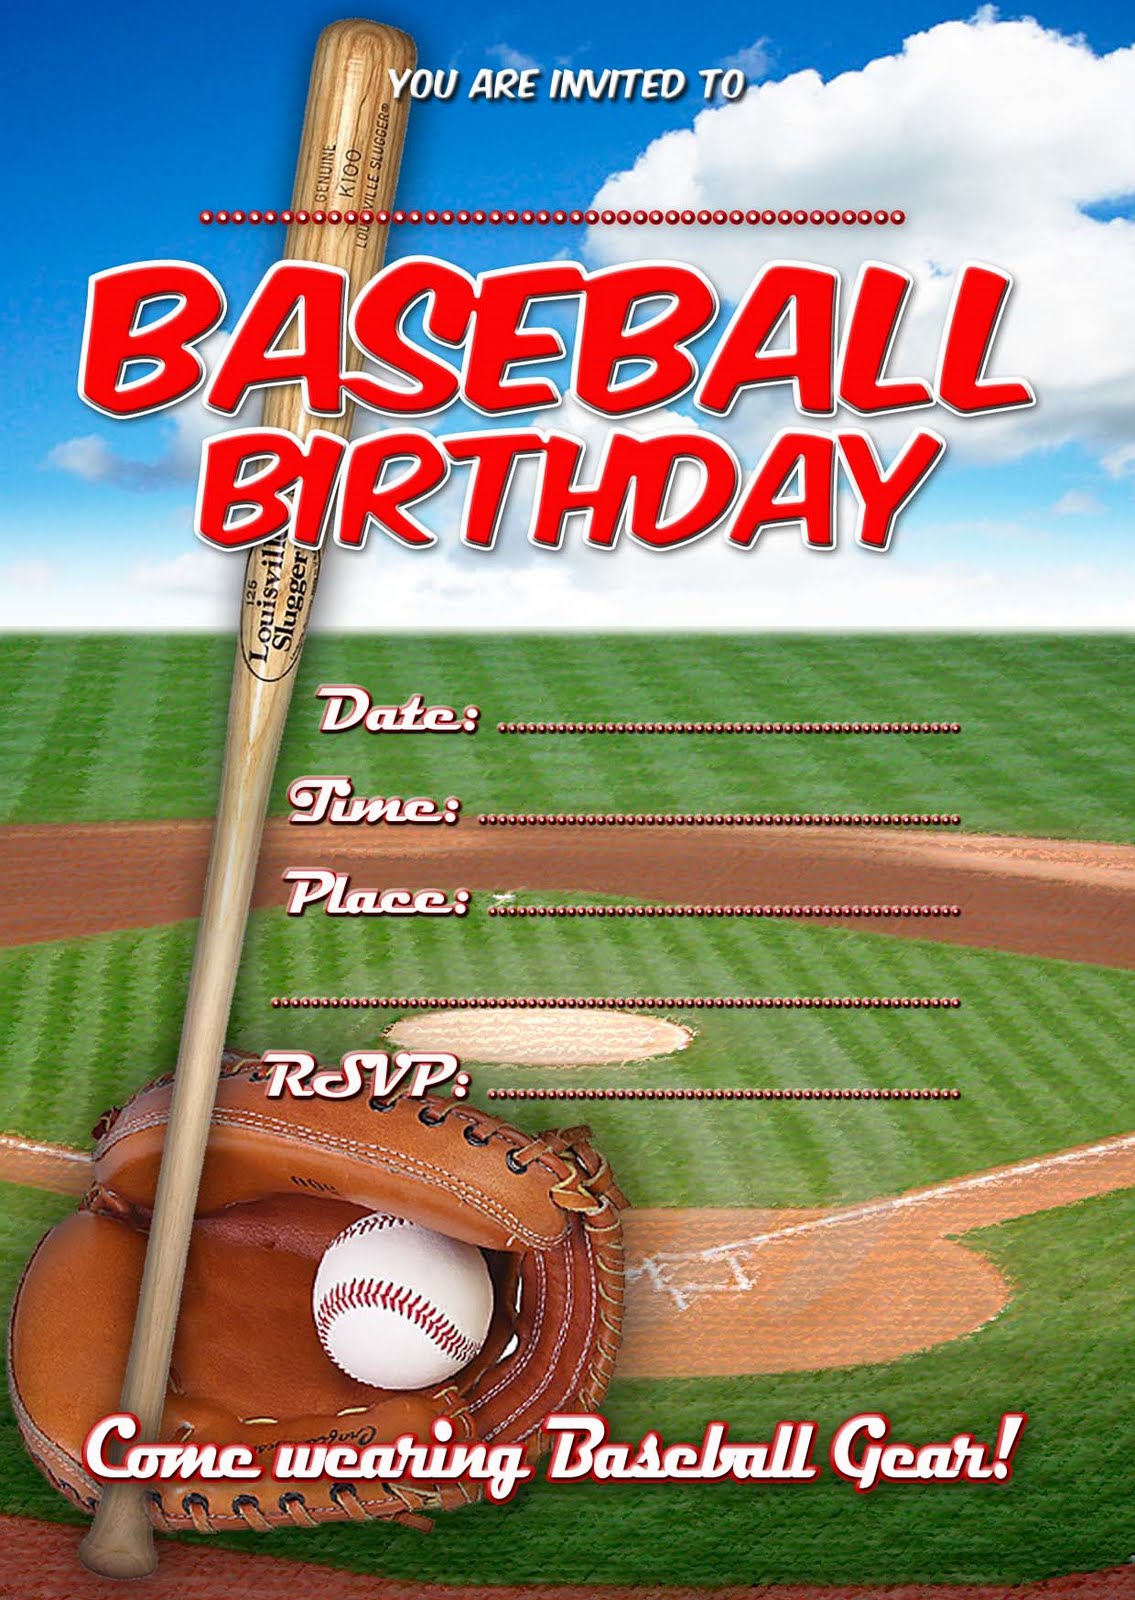 FREE Kids Party Invitations: Baseball Birthday Invitation1135 x 1600